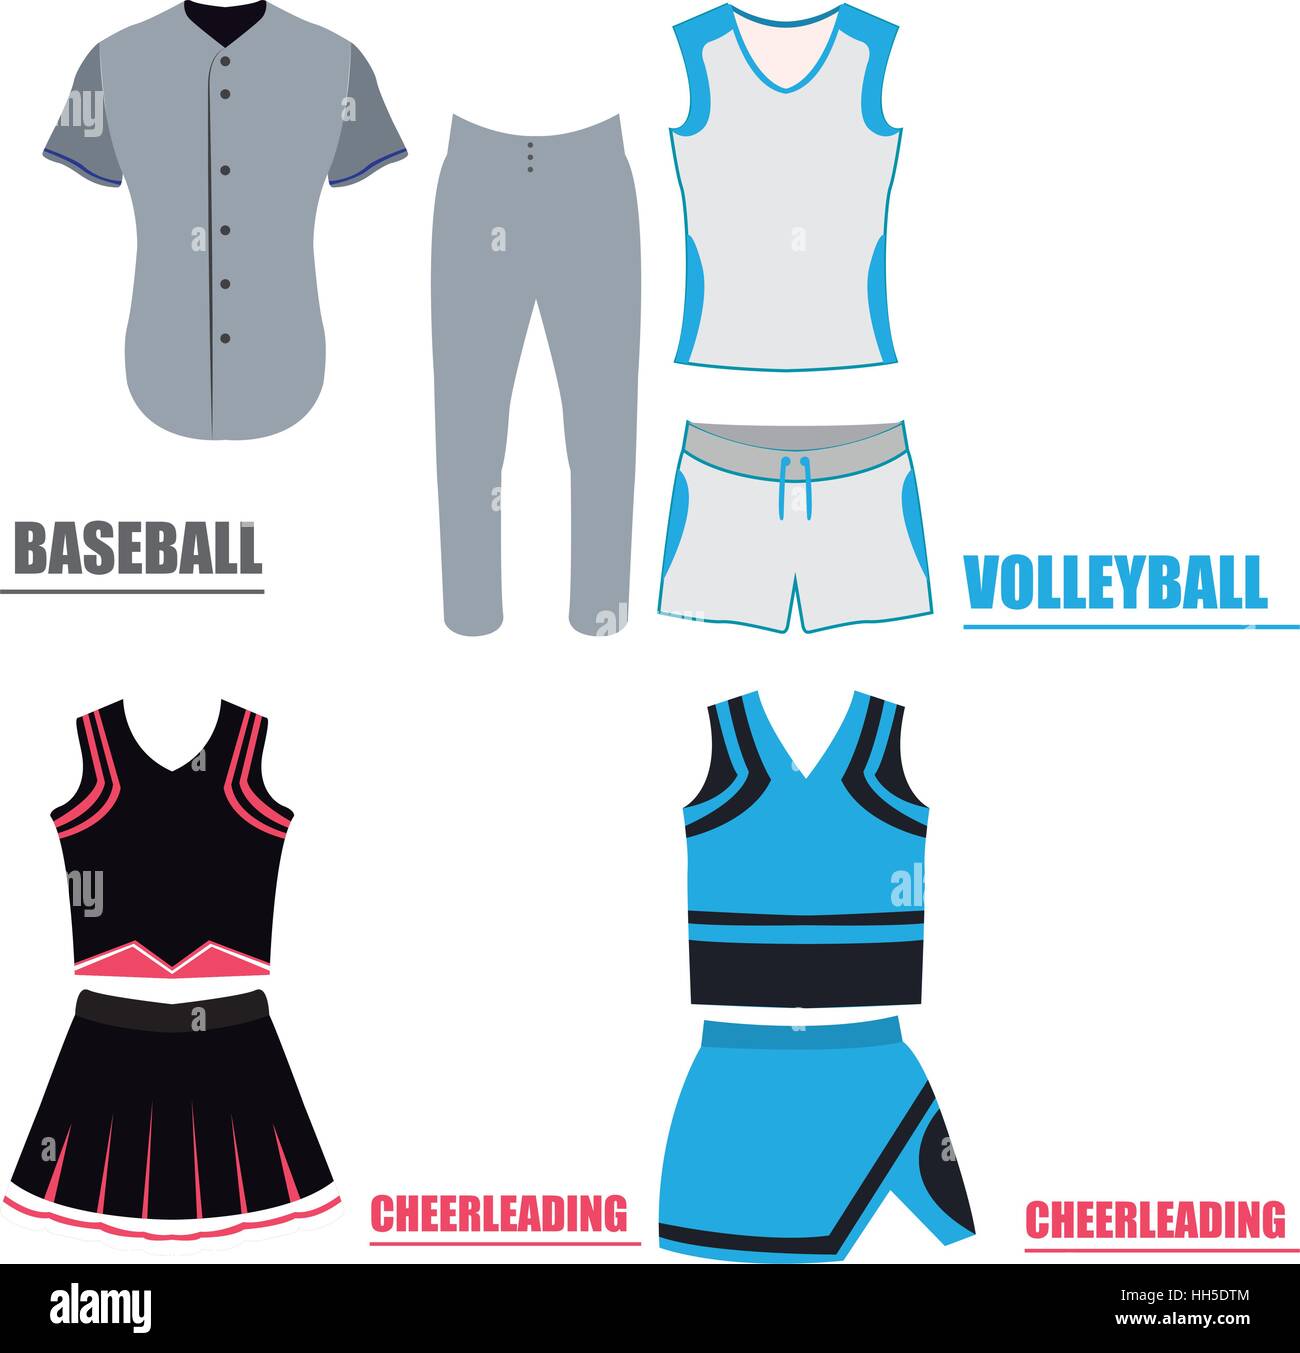 Conjunto uniformes deportivos Imagen de stock - Alamy